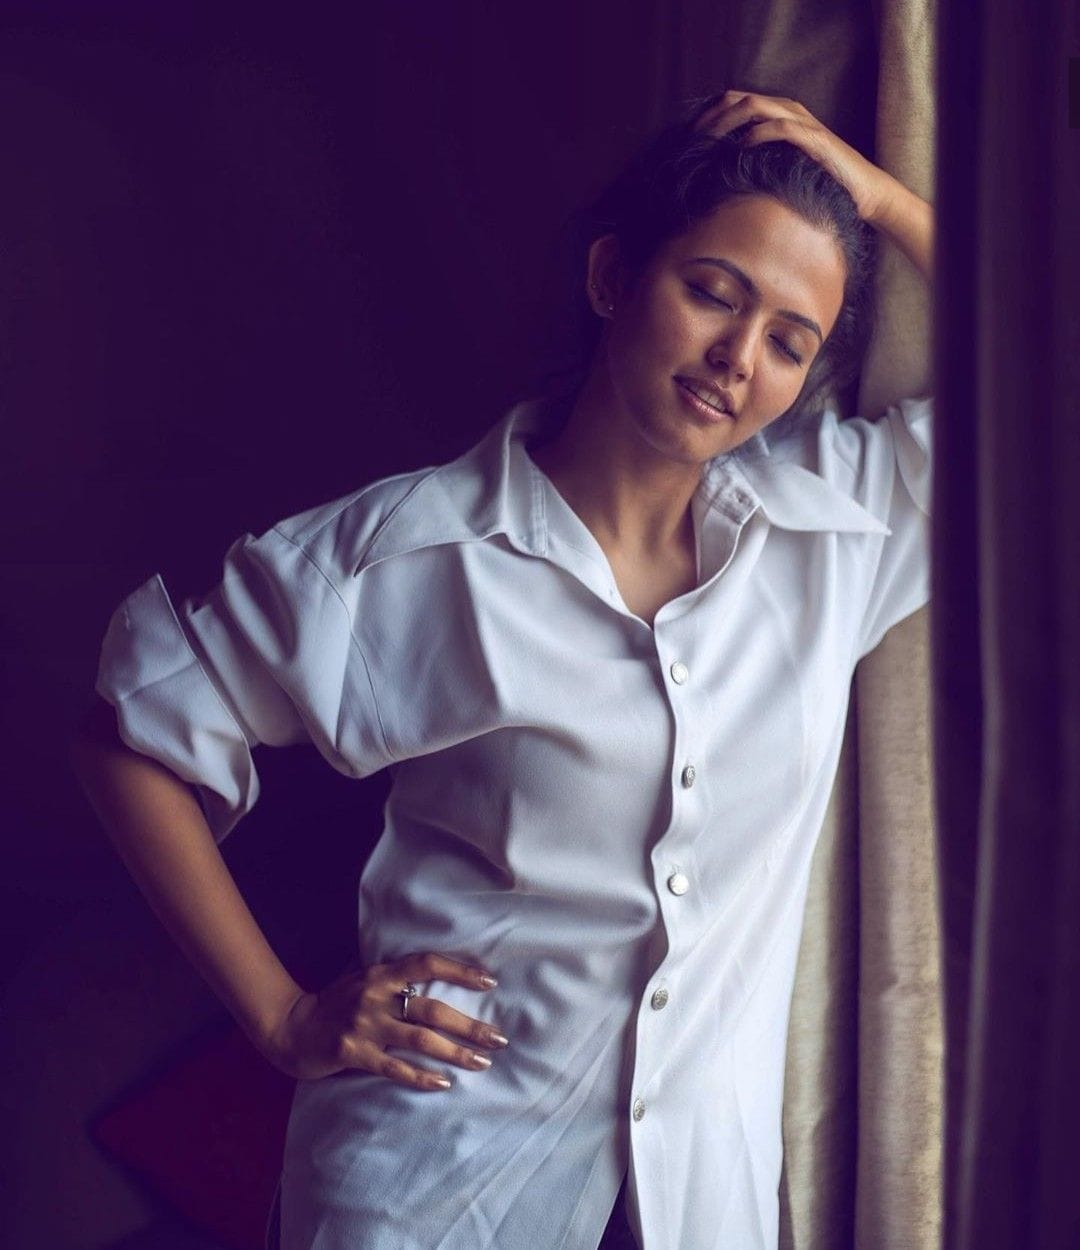 Kavin-Aparna Das starrer “DADA” First Look revealed